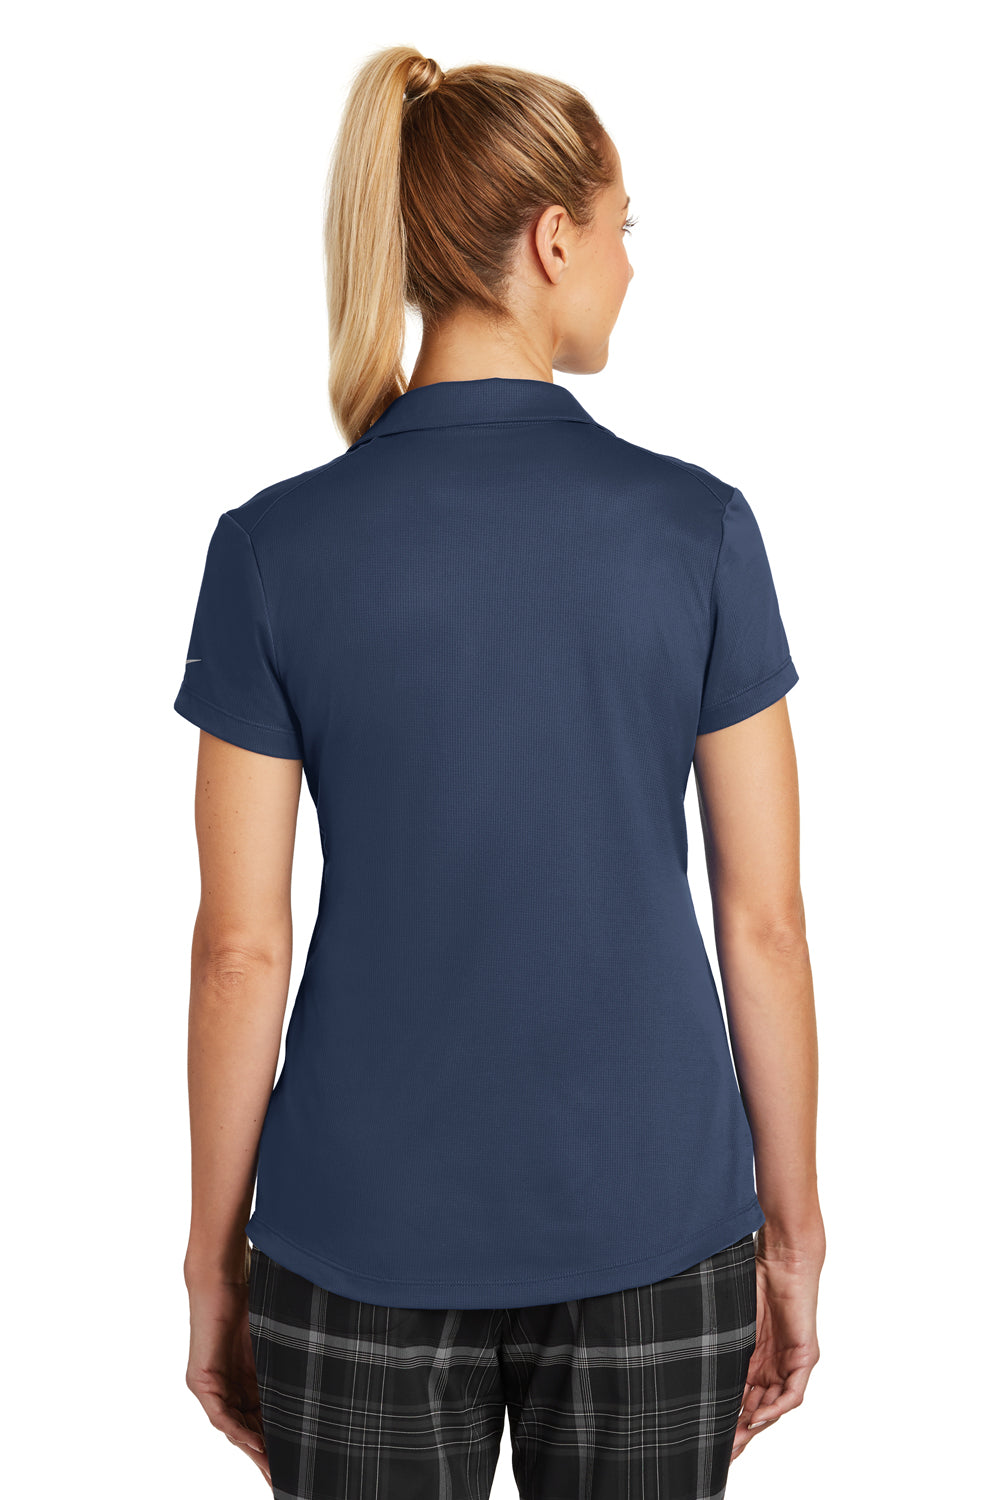 Nike 838957 Womens Legacy Dri-Fit Moisture Wicking Short Sleeve Polo Shirt Midnight Navy Blue Model Back